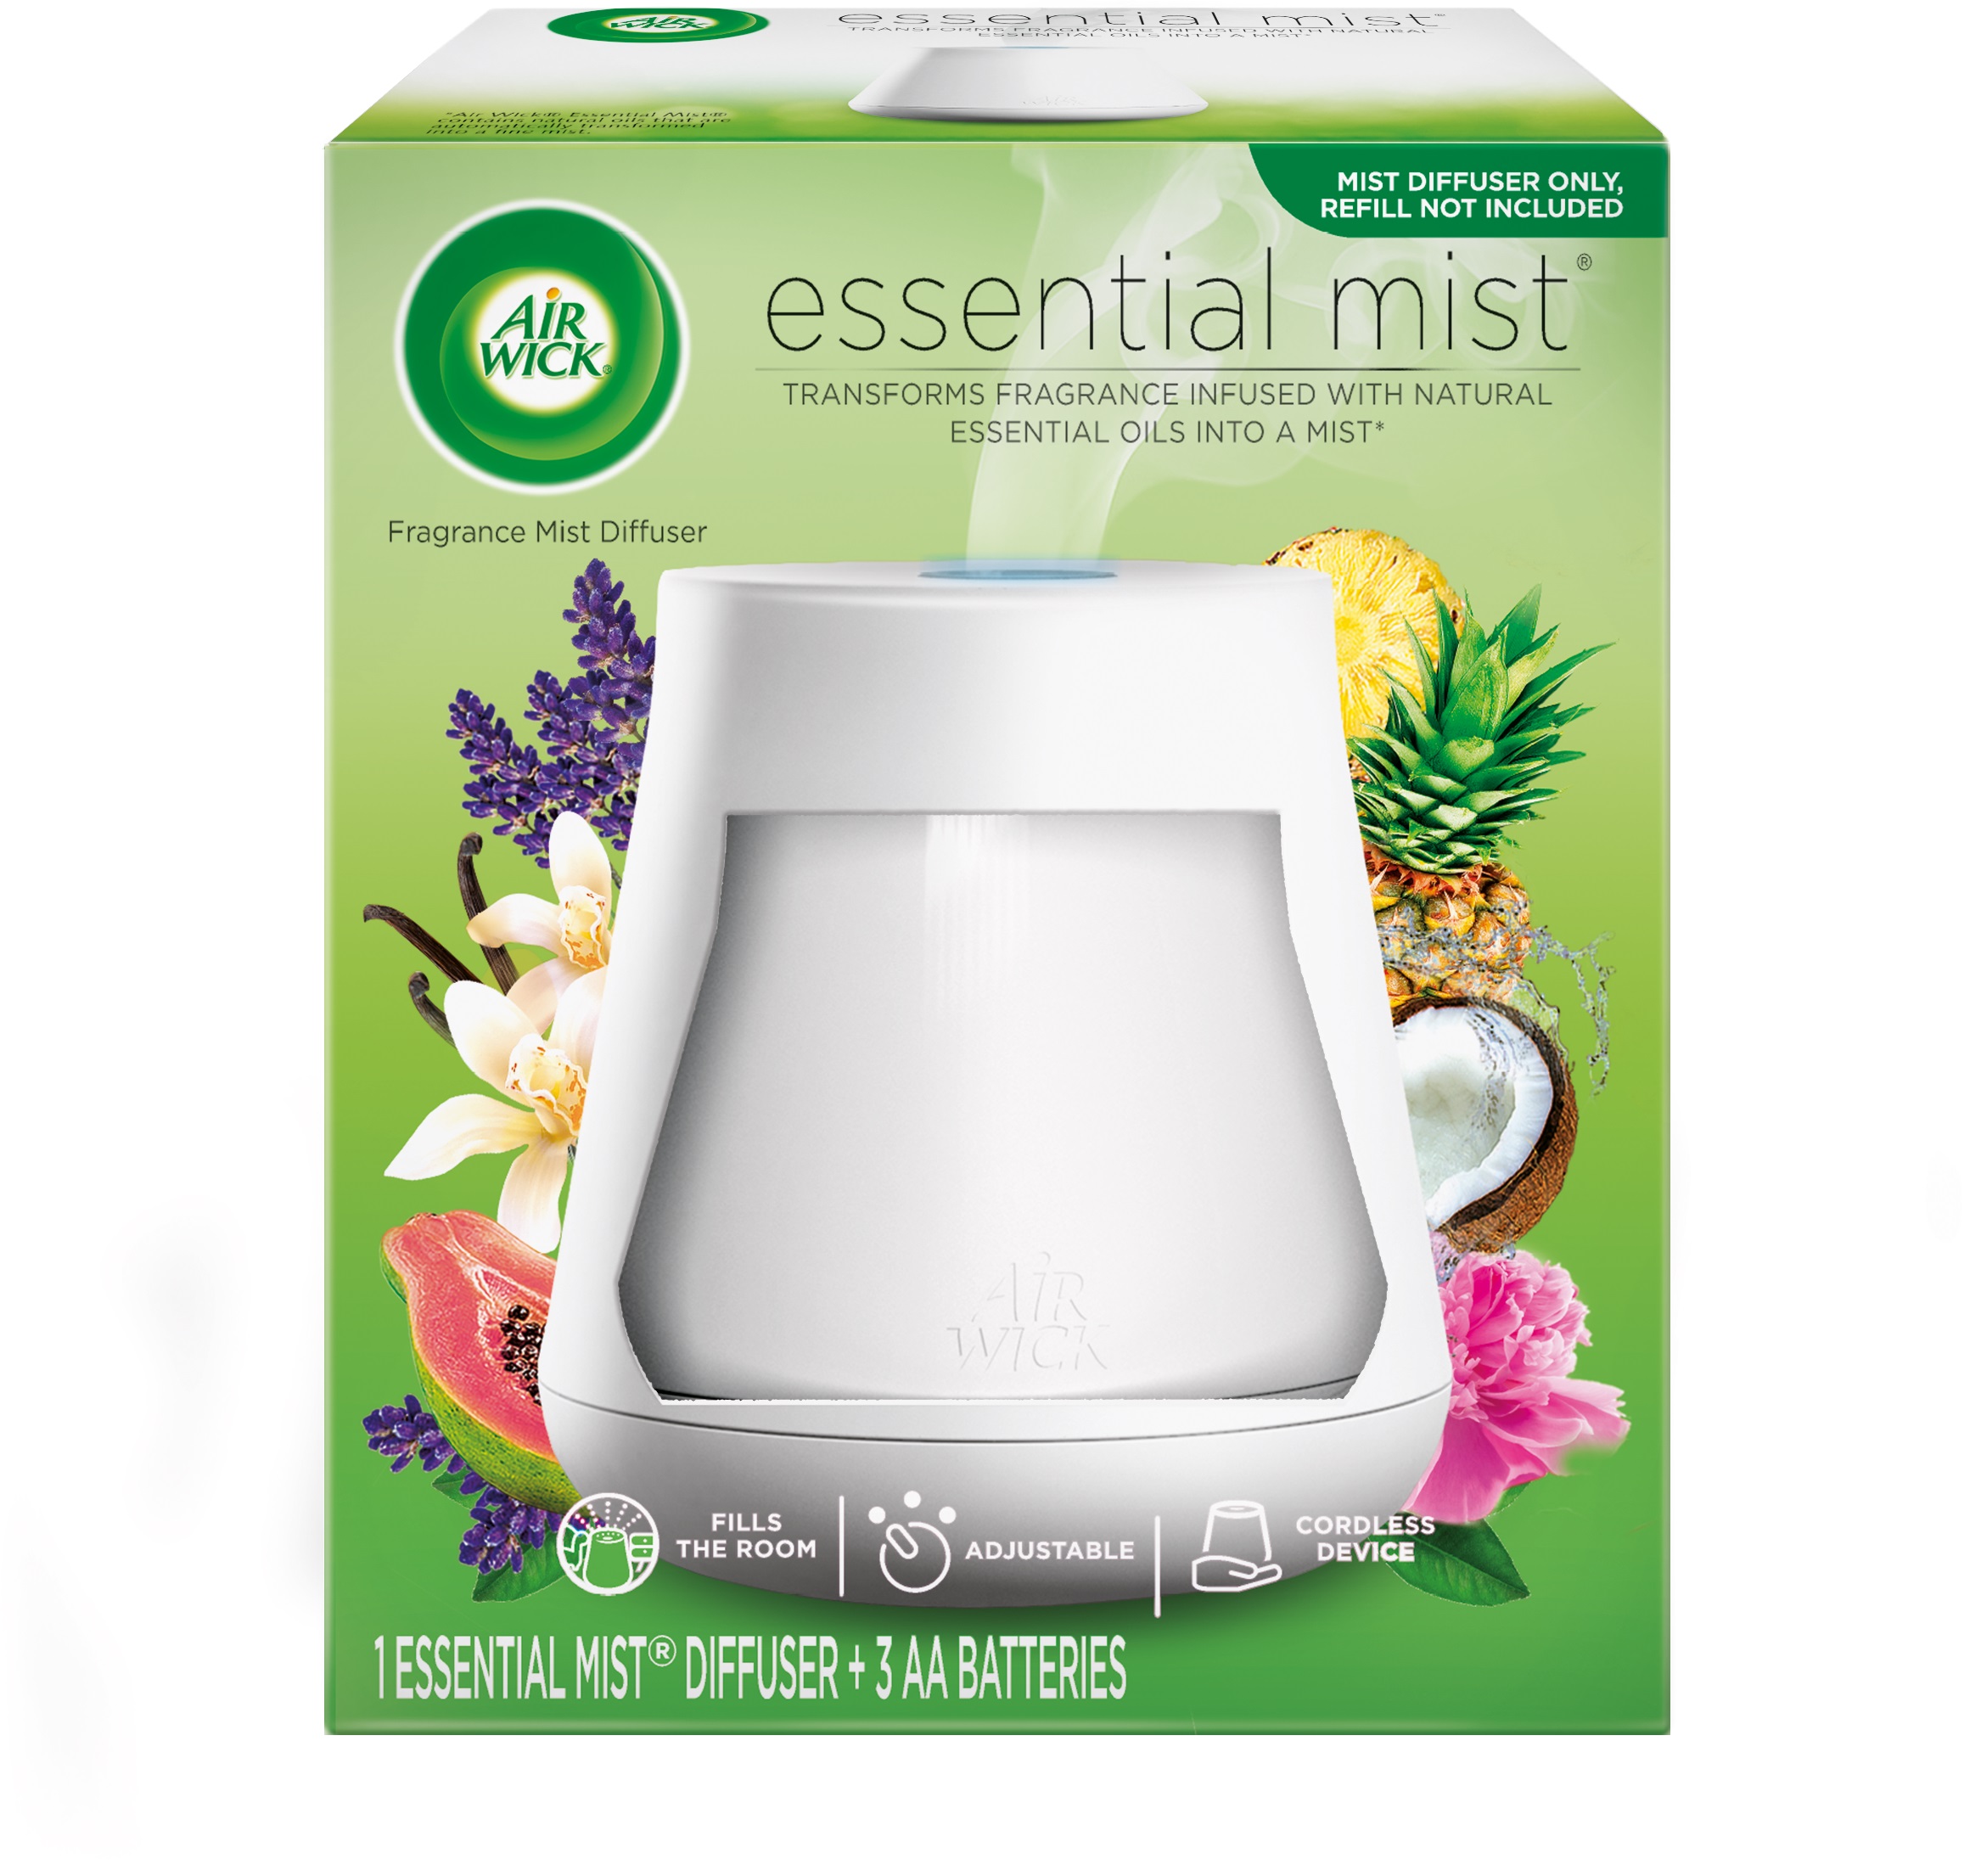 AIR WICK Essential Mist Diffuser White